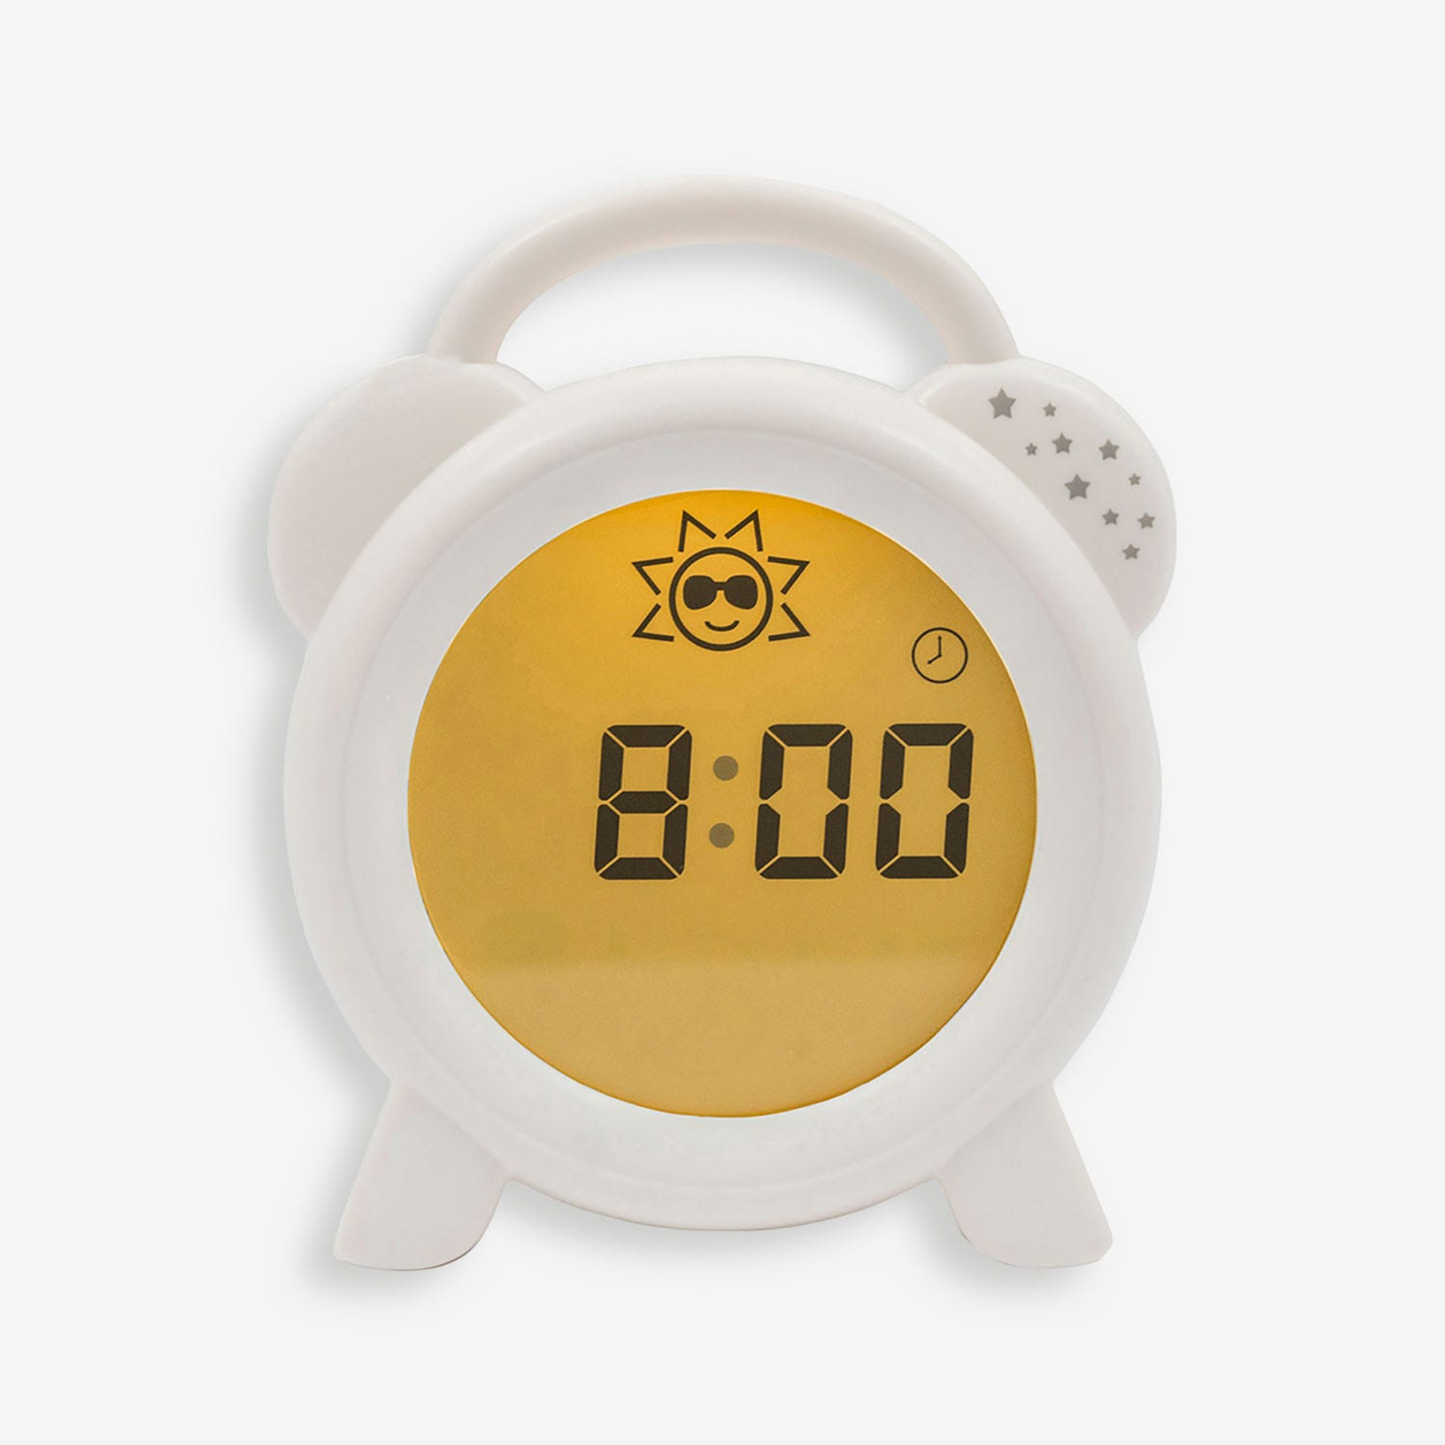 Purflo Snooze Sleep Trainer Clock